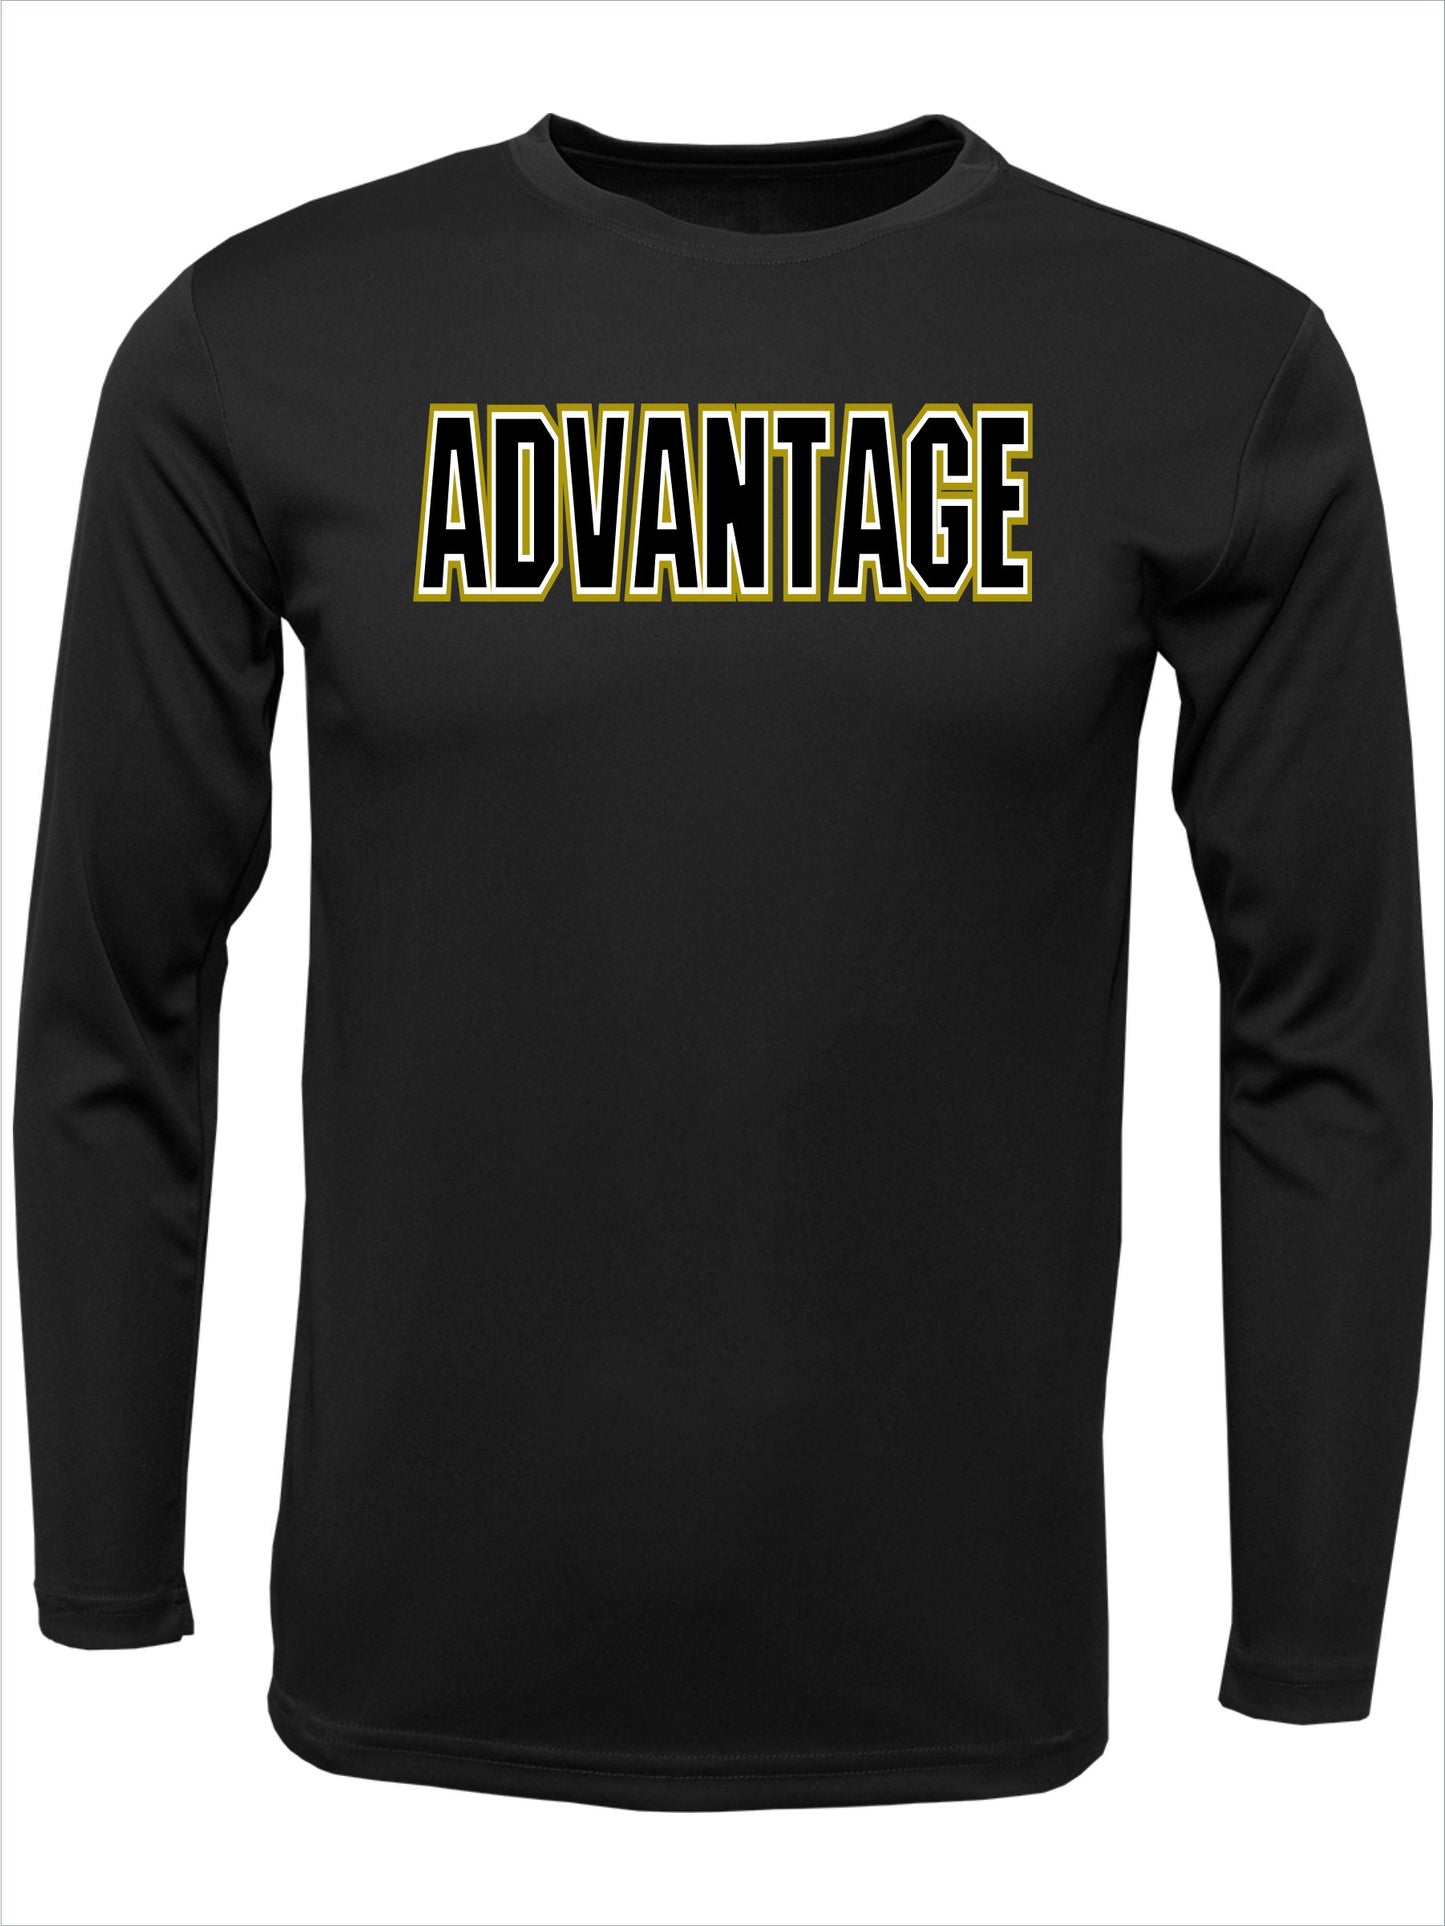 Long Sleeve "Advantage" Dri-Fit T-Shirt